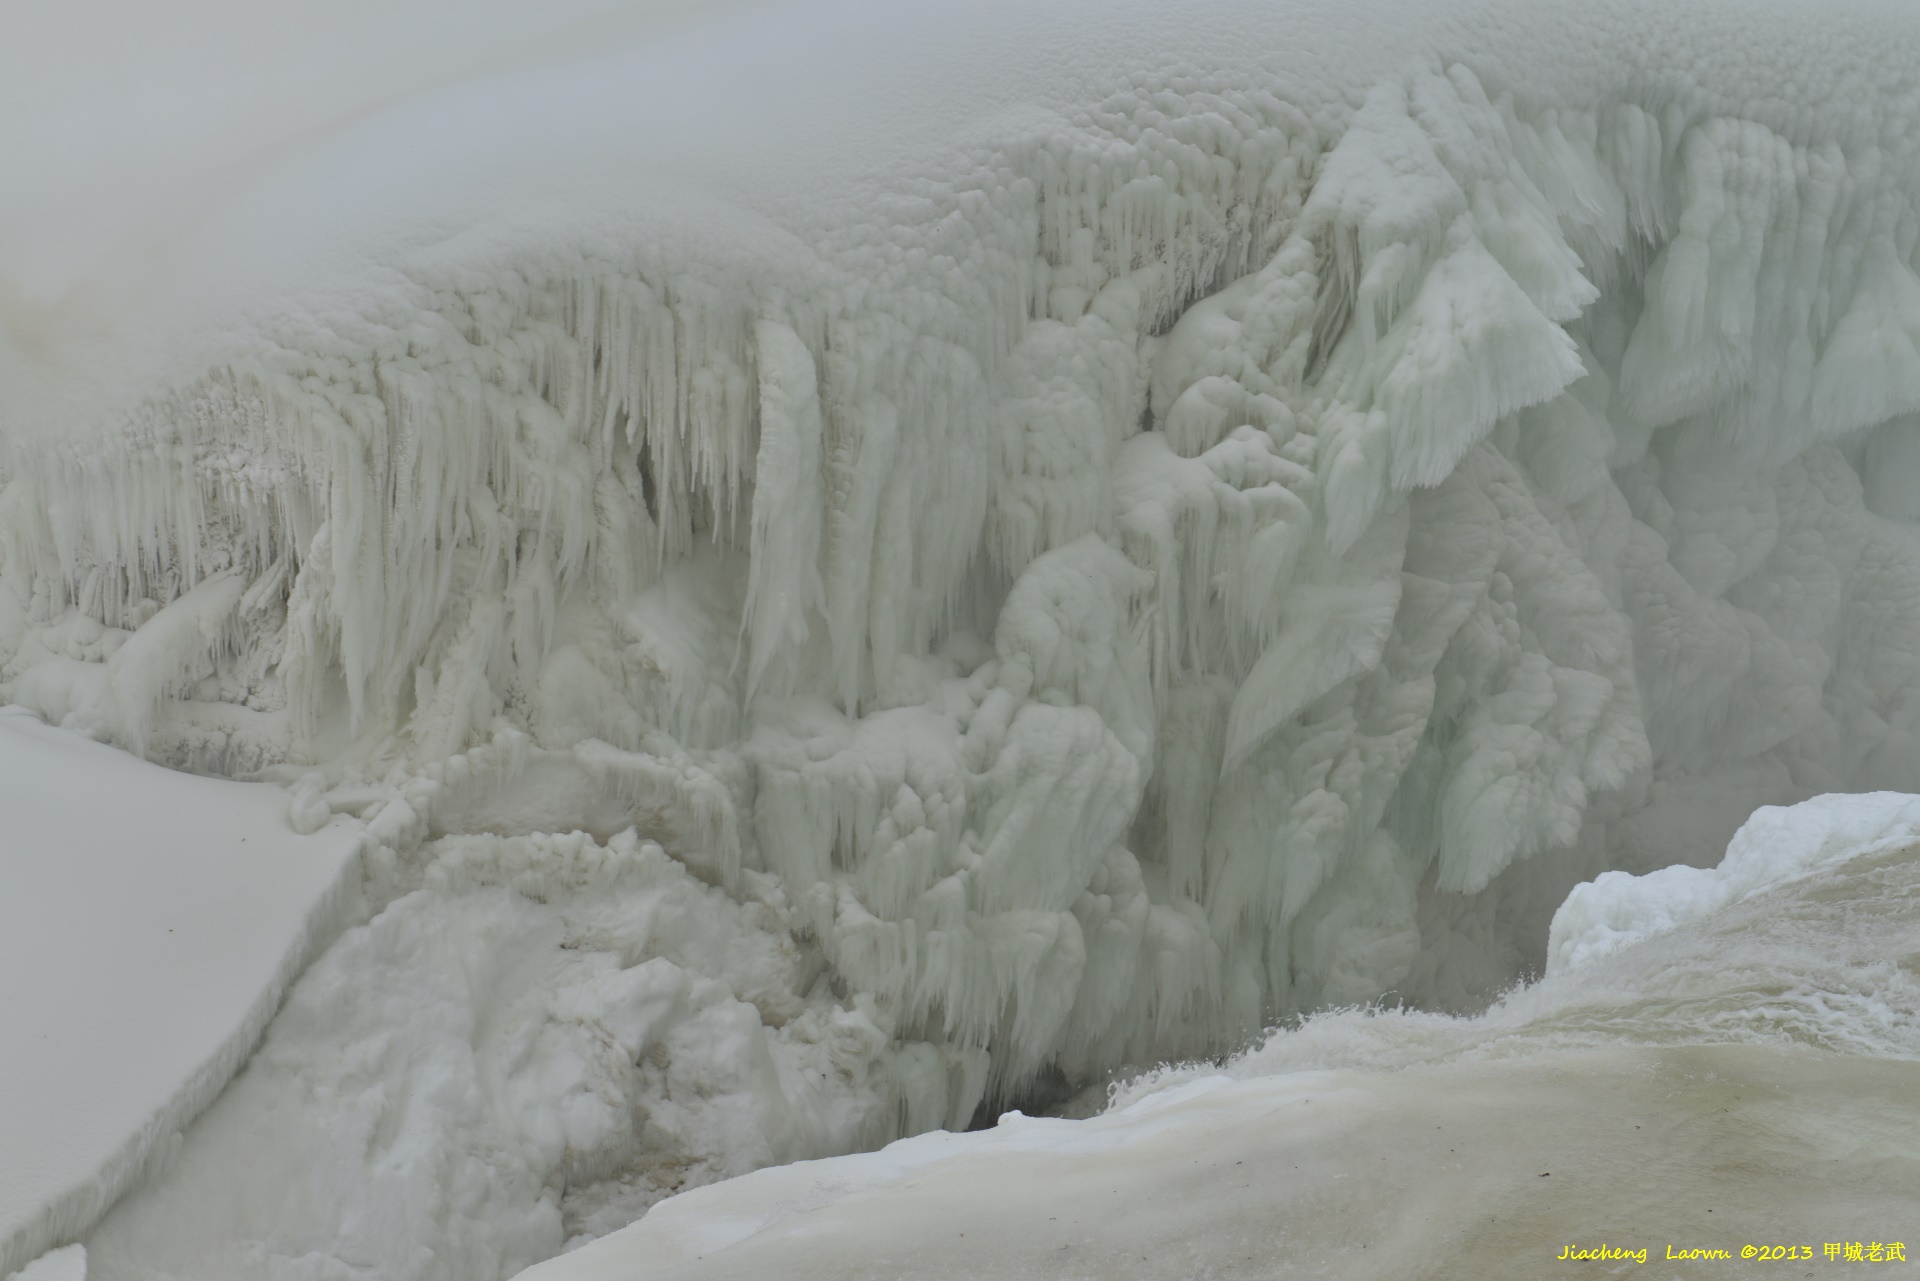 Letchworth SP Ice wall in upper fall